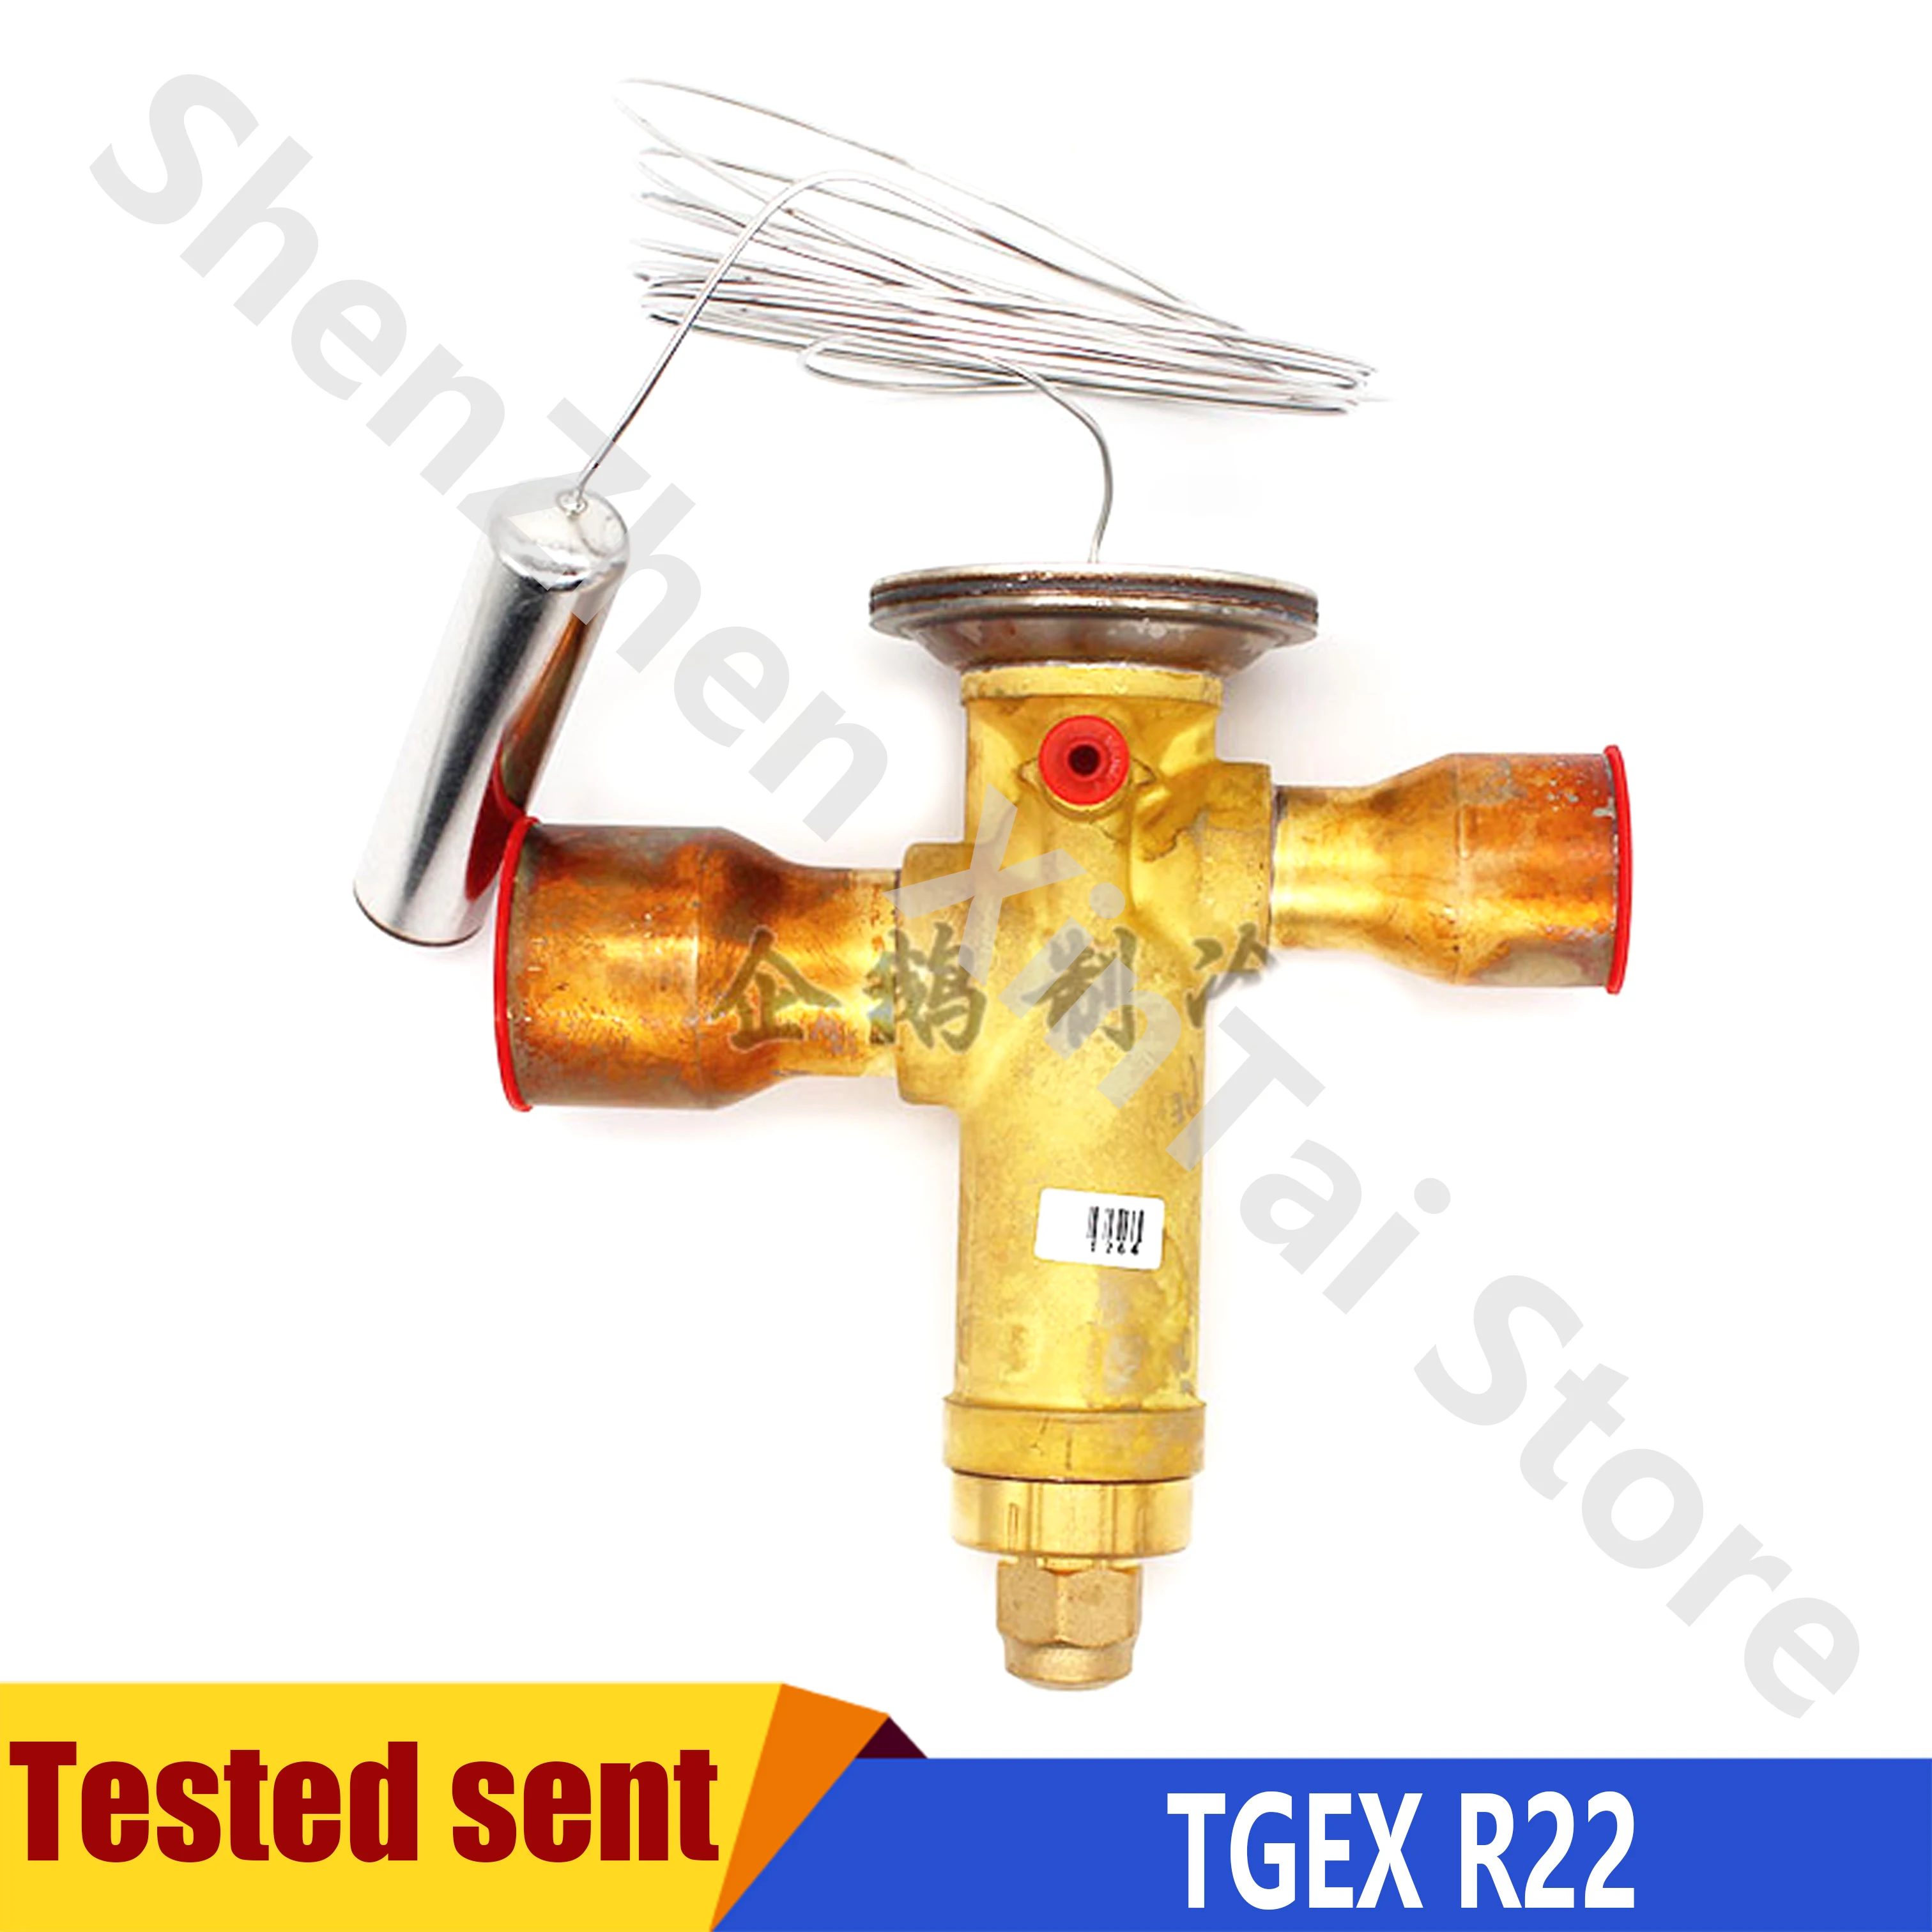 

Original Thermal expansion valve TGEX R22/R407C 067N2161 15TR 54KW